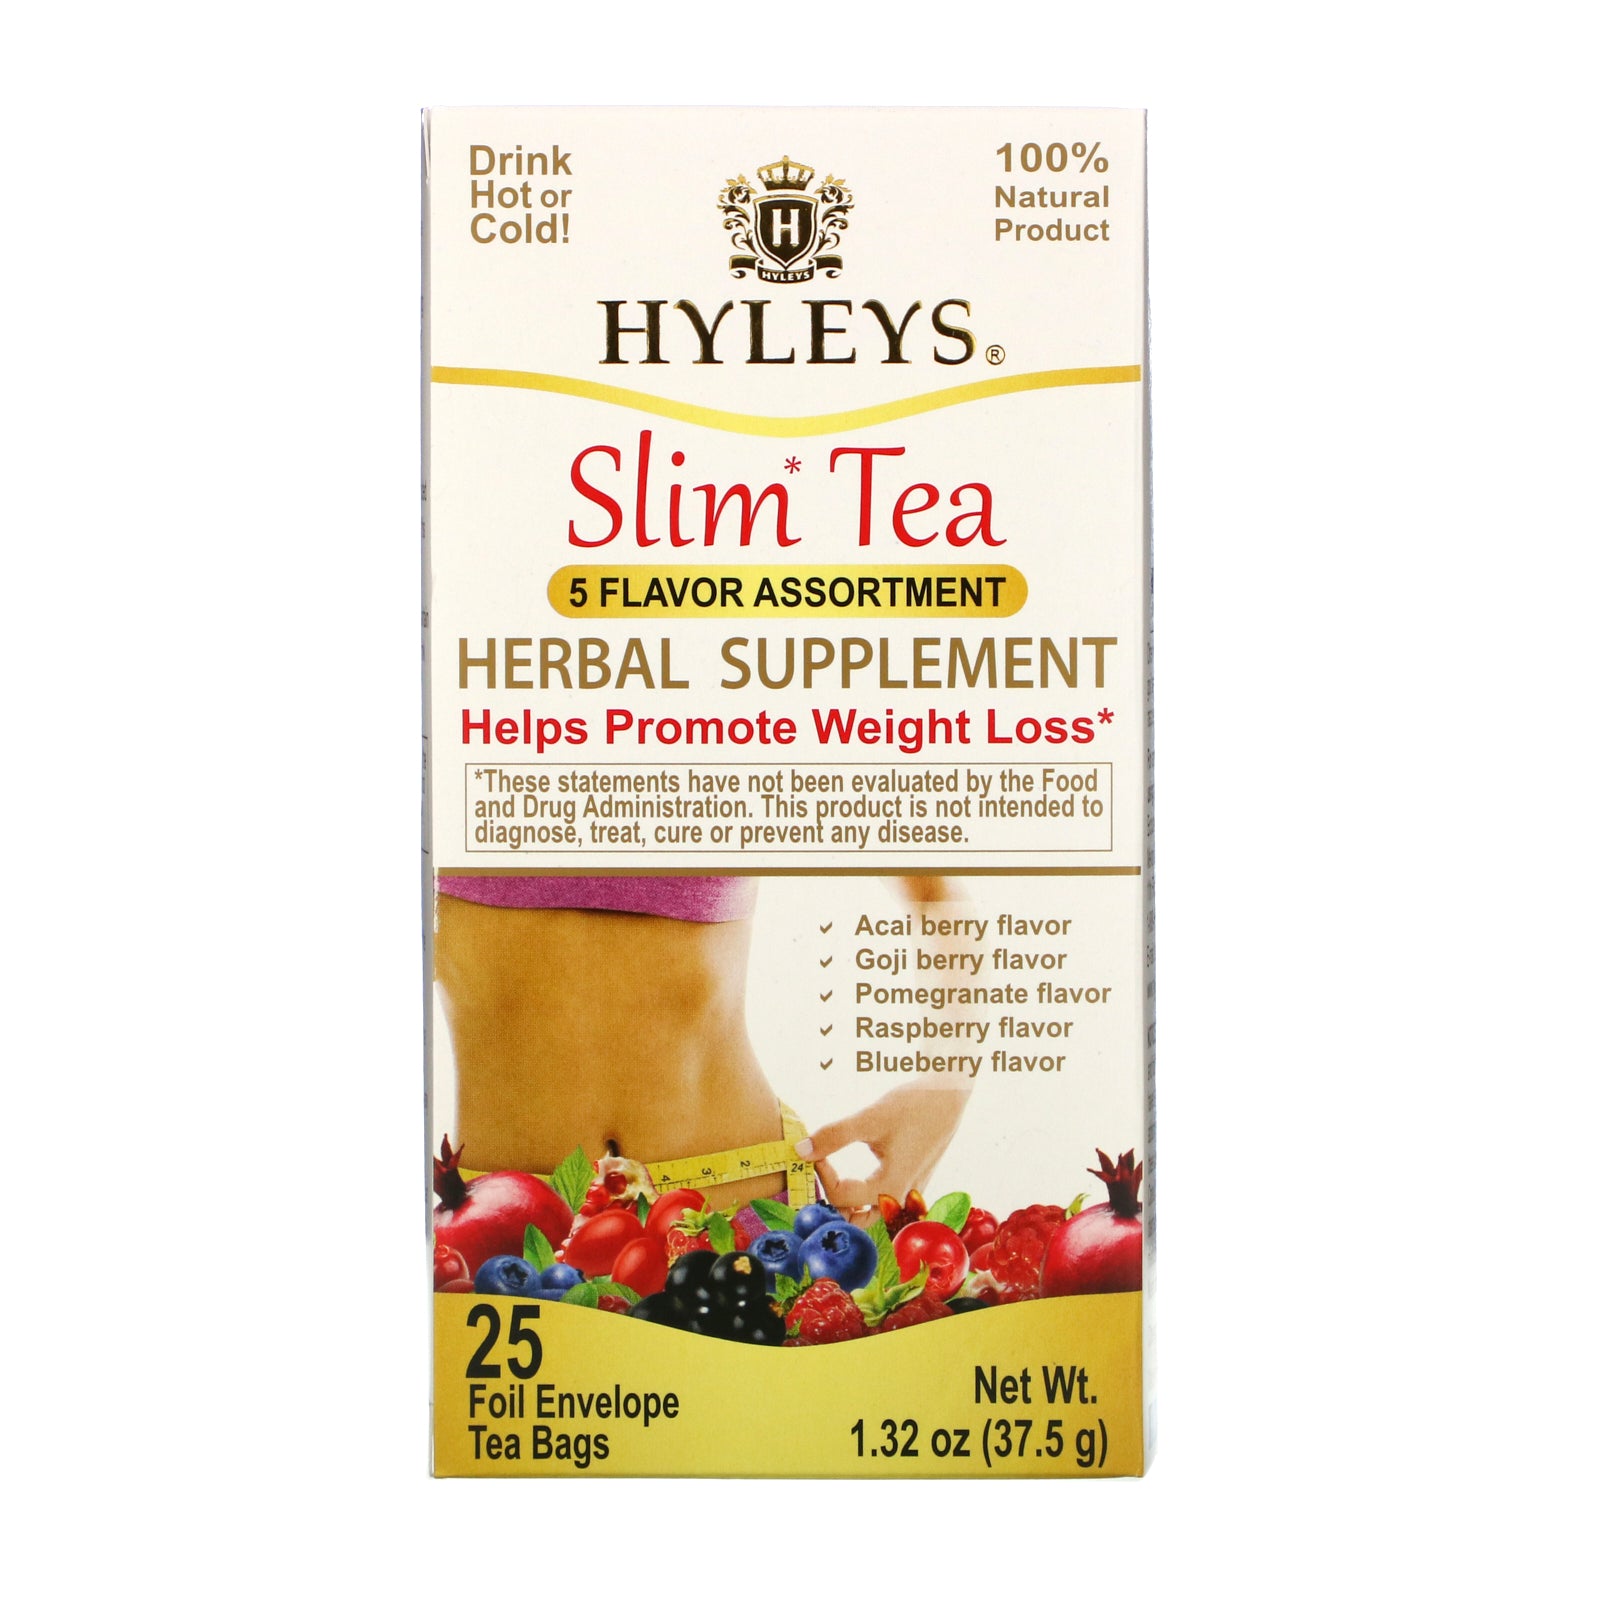 Hyleys Tea, Slim Tea, 5 Flavor Assortment, 25 Foil Envelope Tea Bags, 1.32 oz (37.5 g)